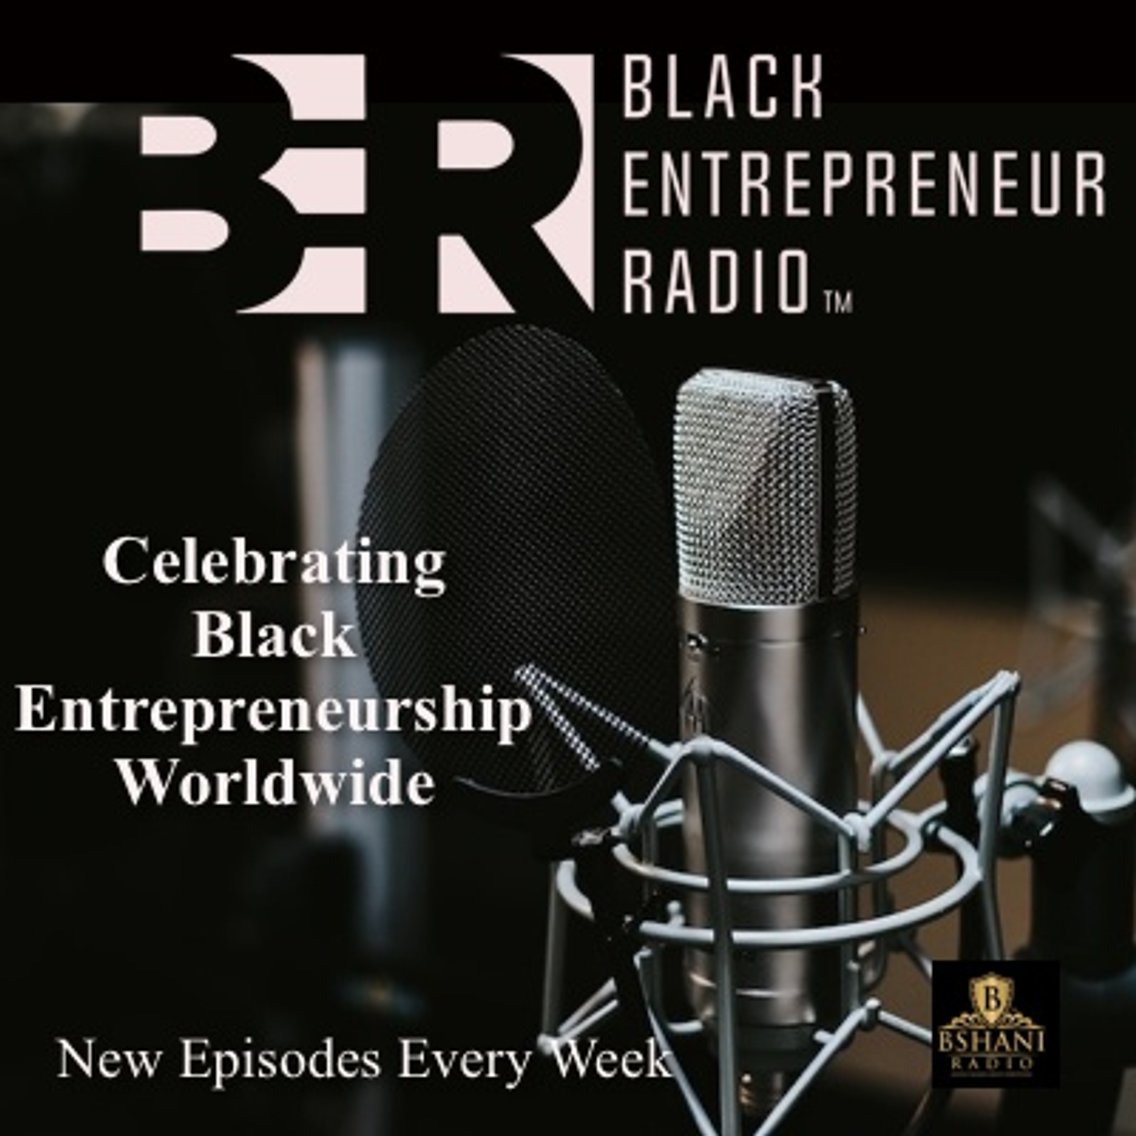 Black Entrepreneur Radio - Cover Image